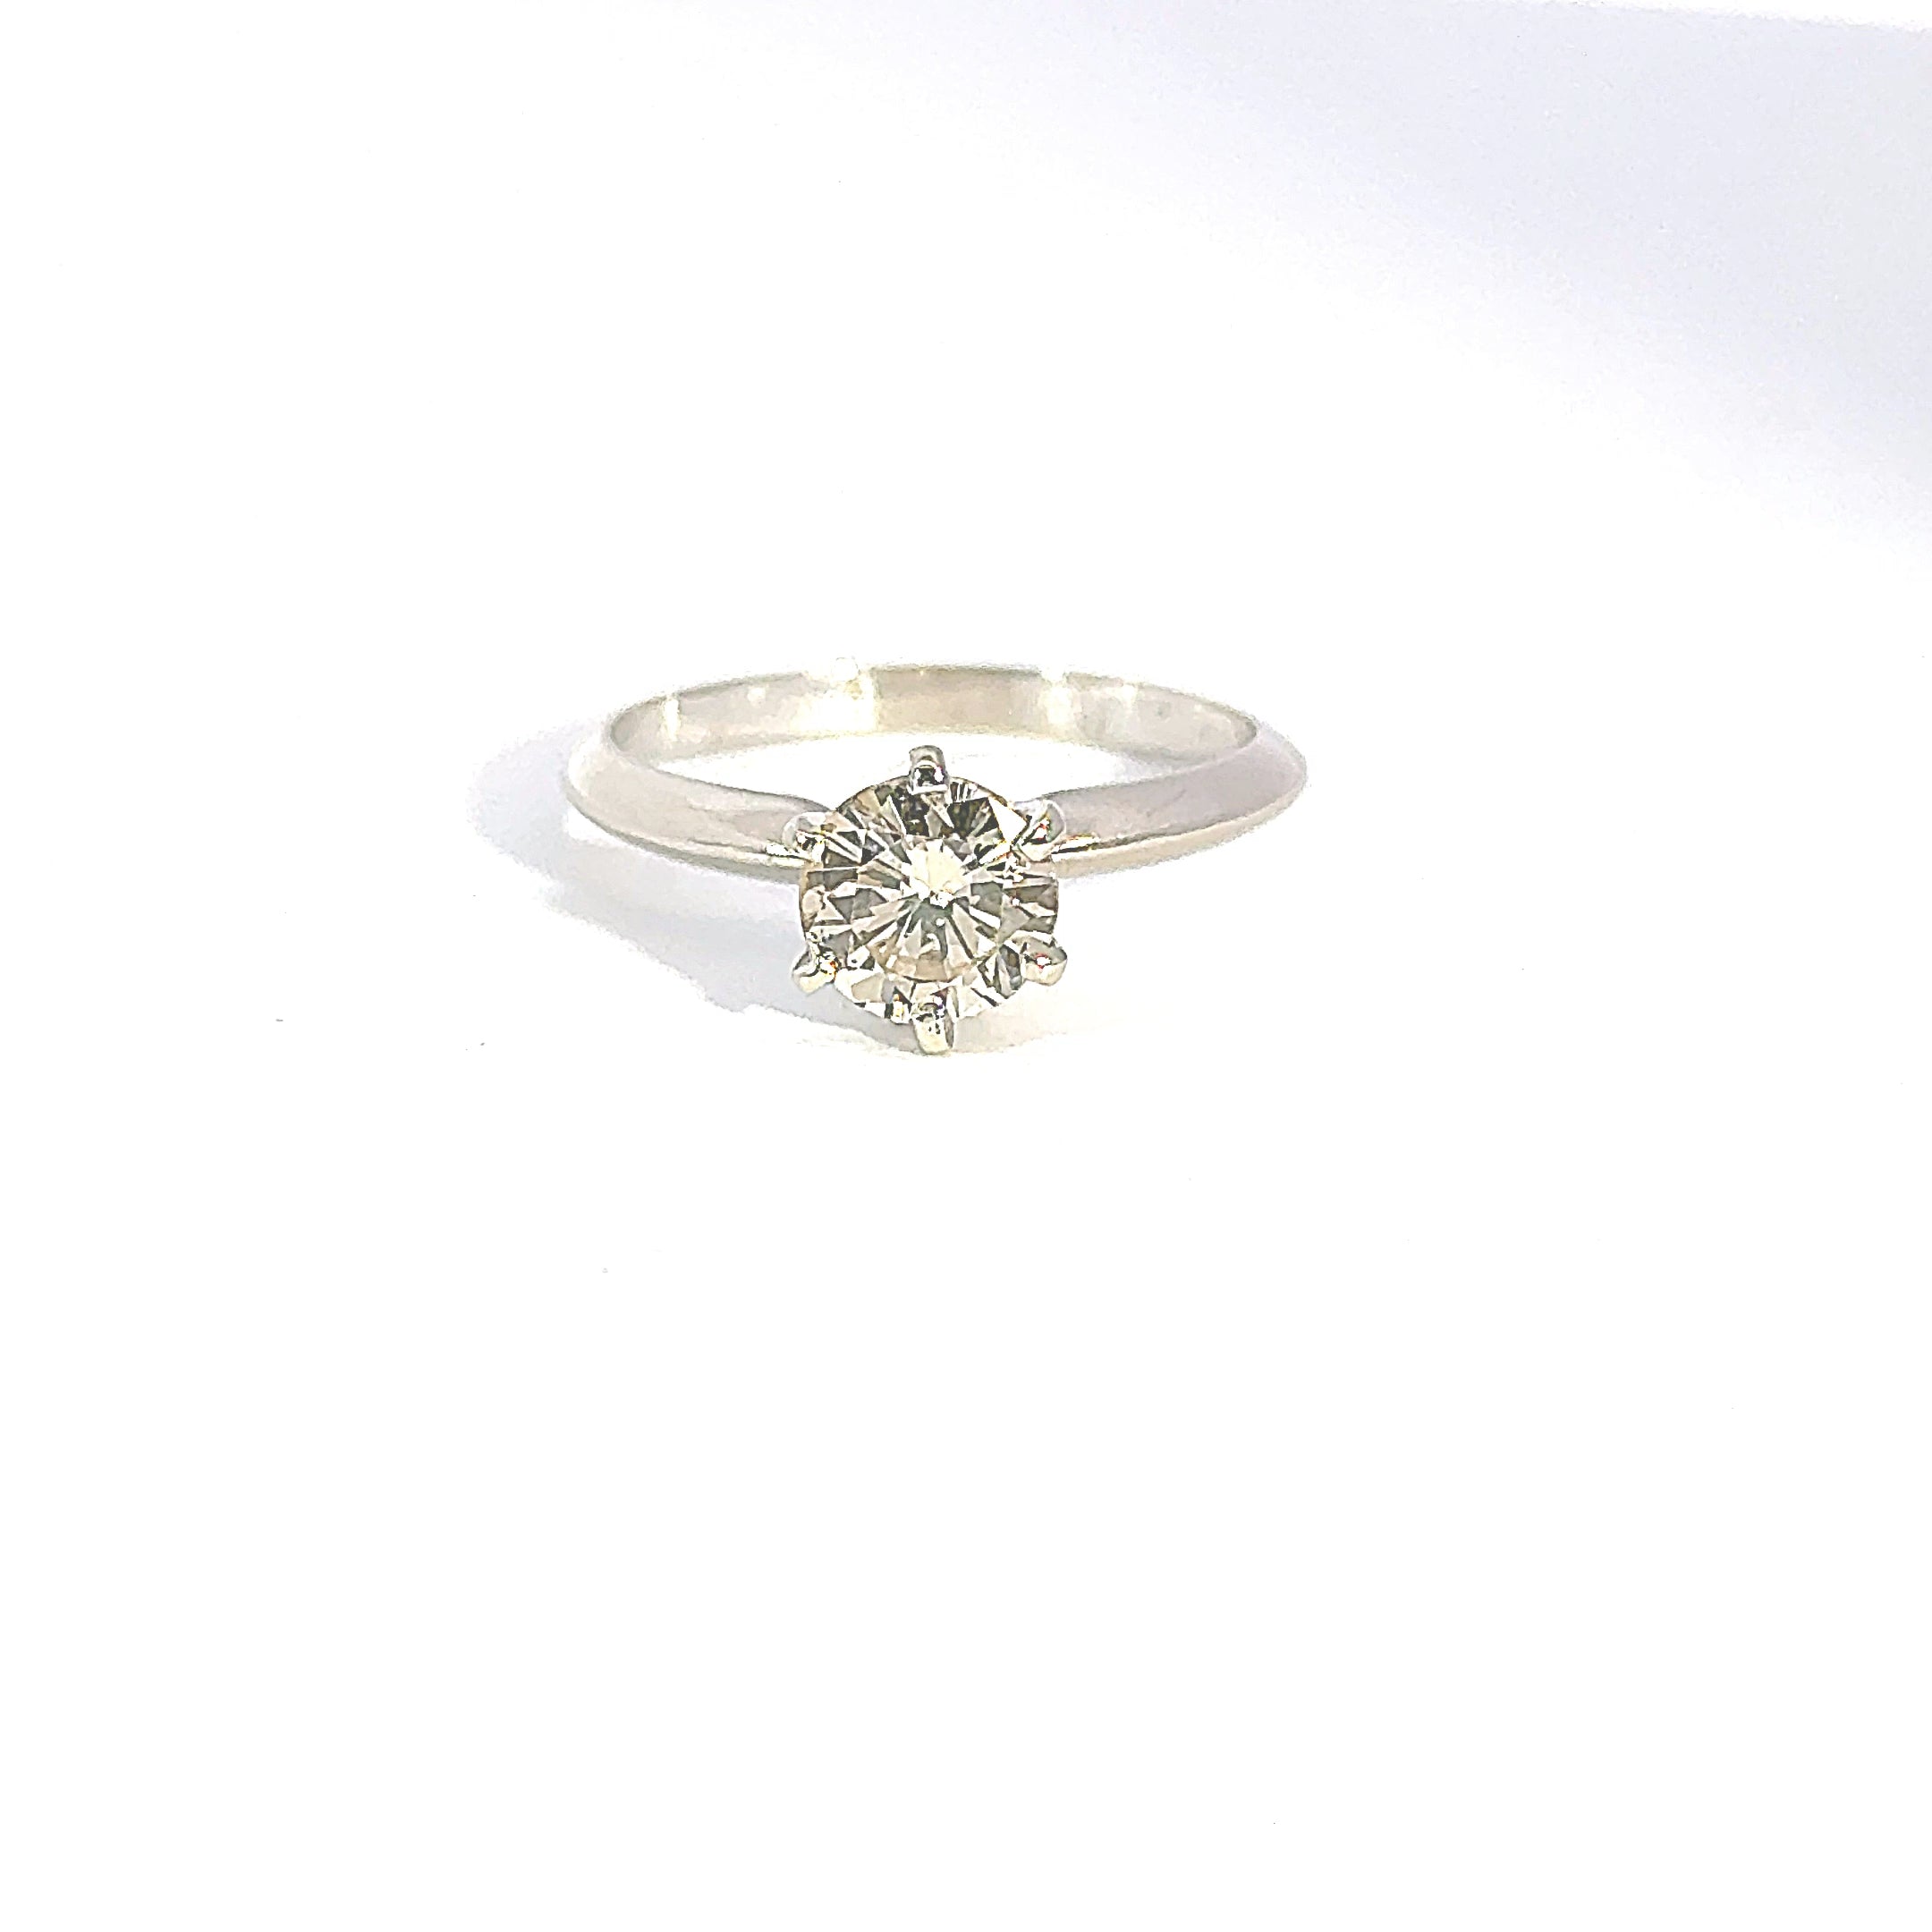 Round Brillant Cut Diamond Ring in 14K White Gold